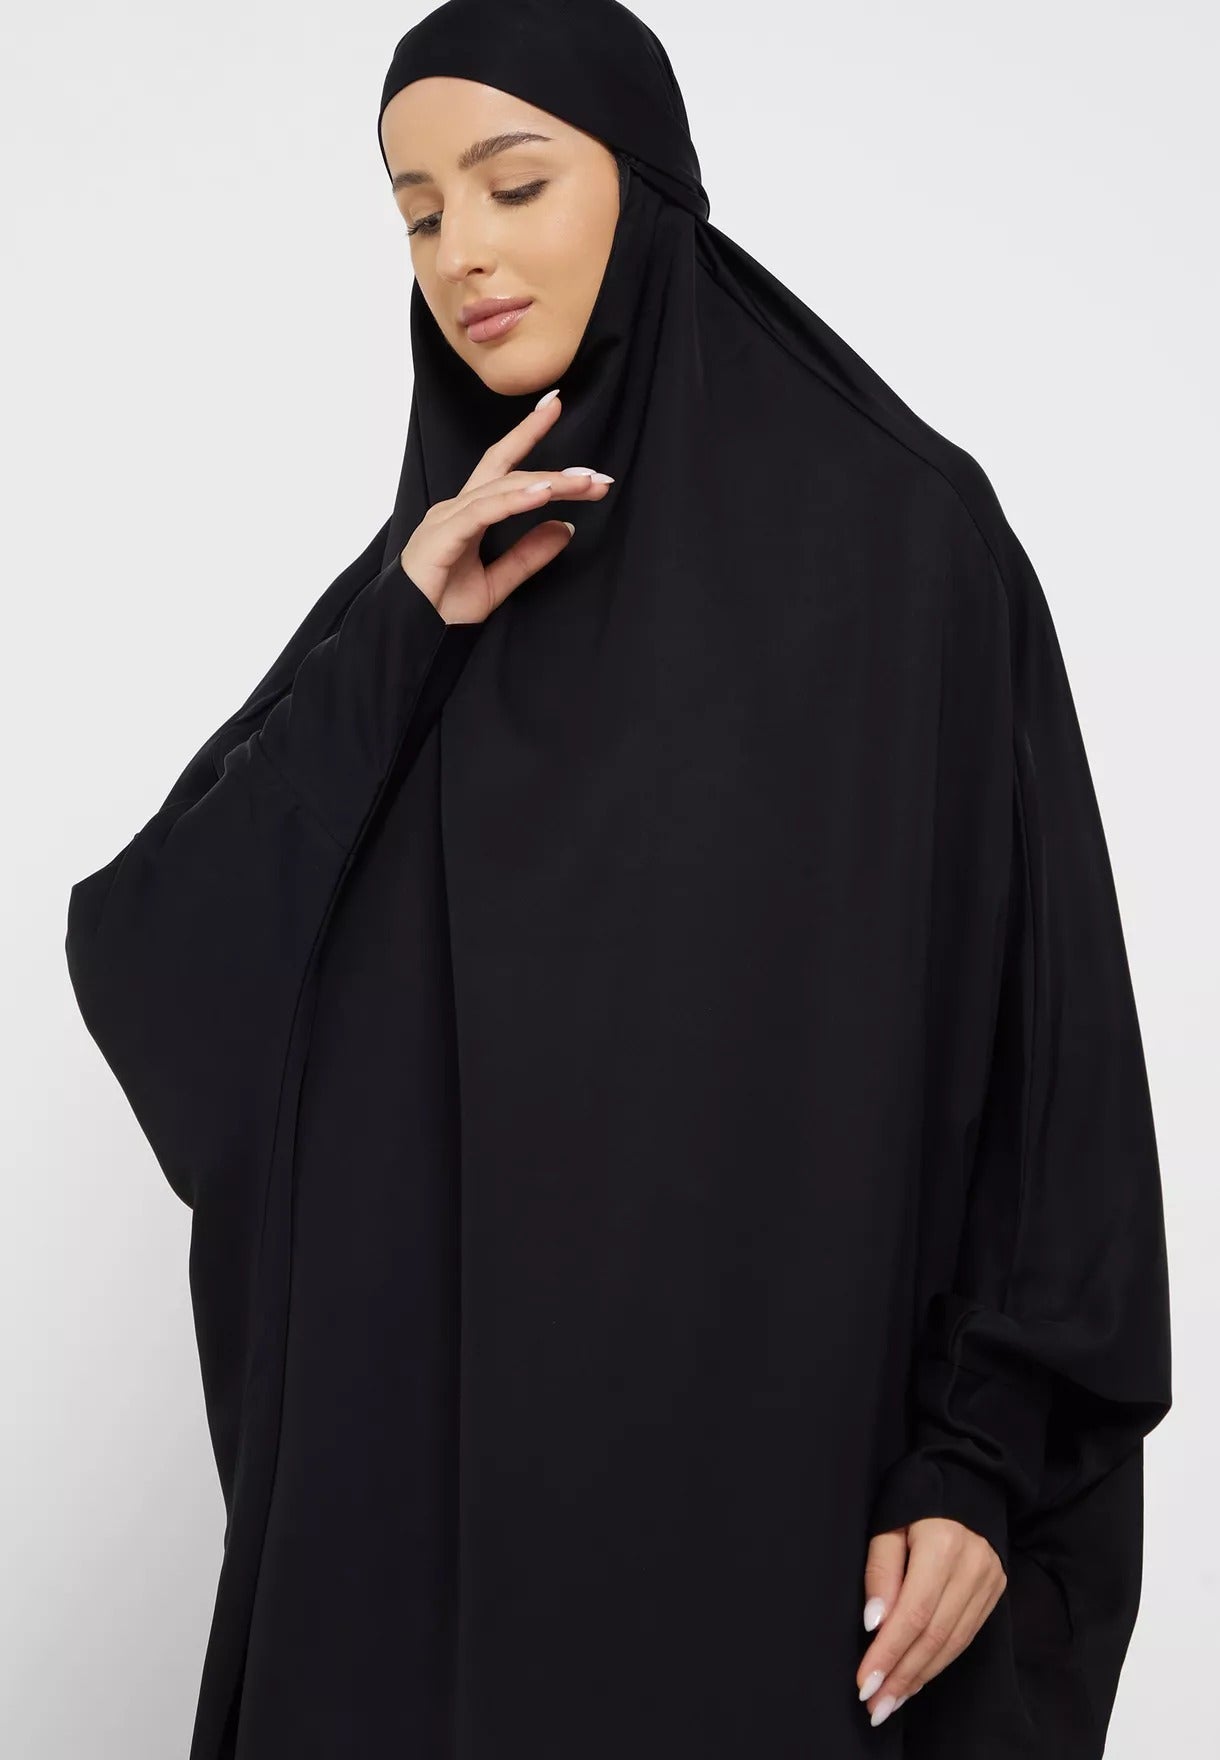 Premium full coverage islamic clothing-N11P-N11P